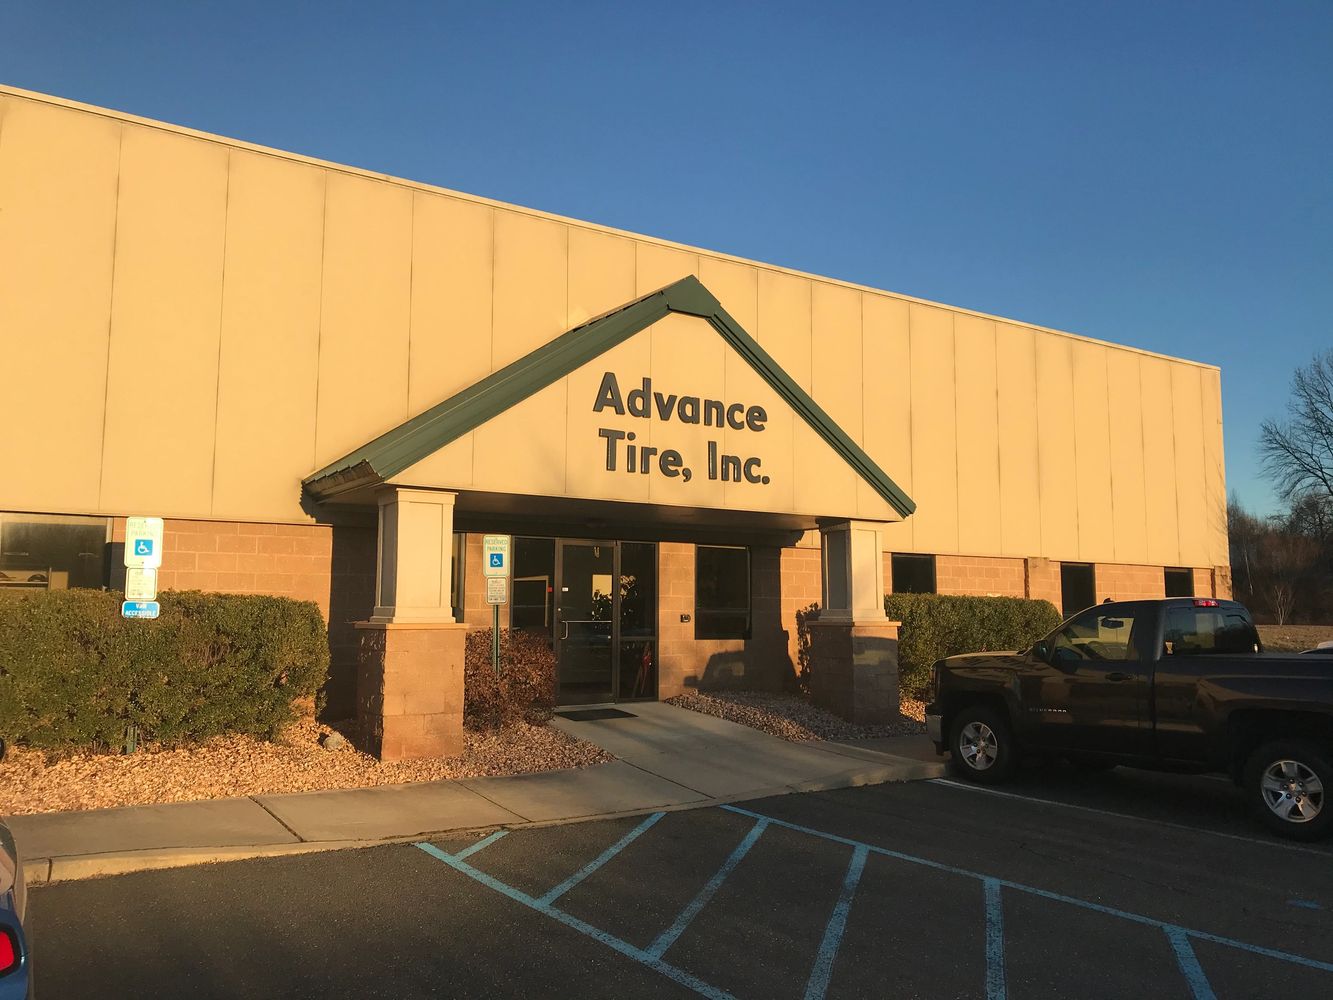 Advance Tire, Inc. façade